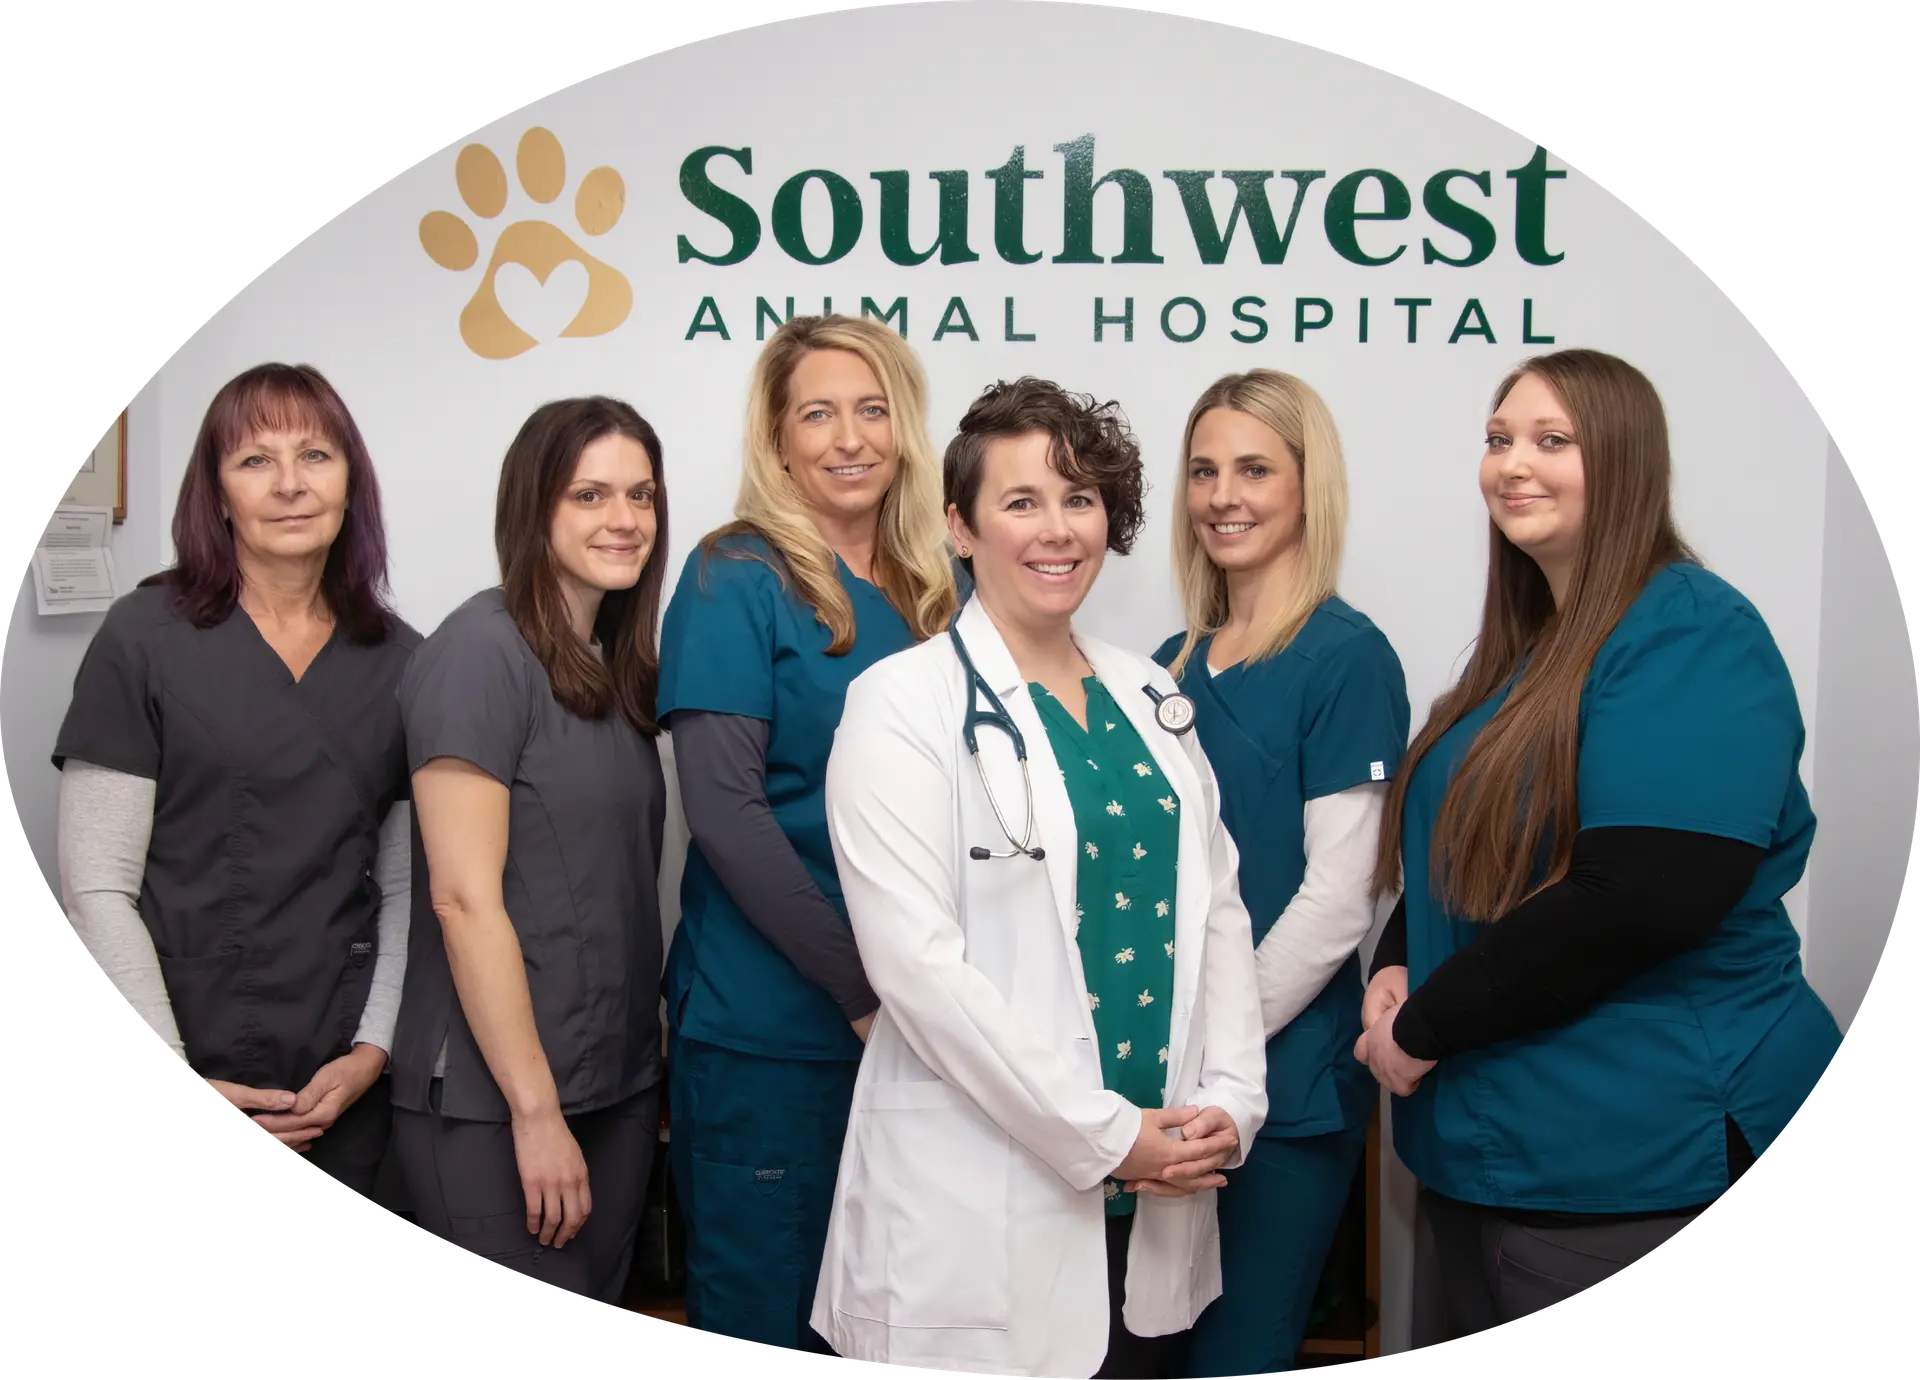 A photo of Southwest Animal Hospital's staff